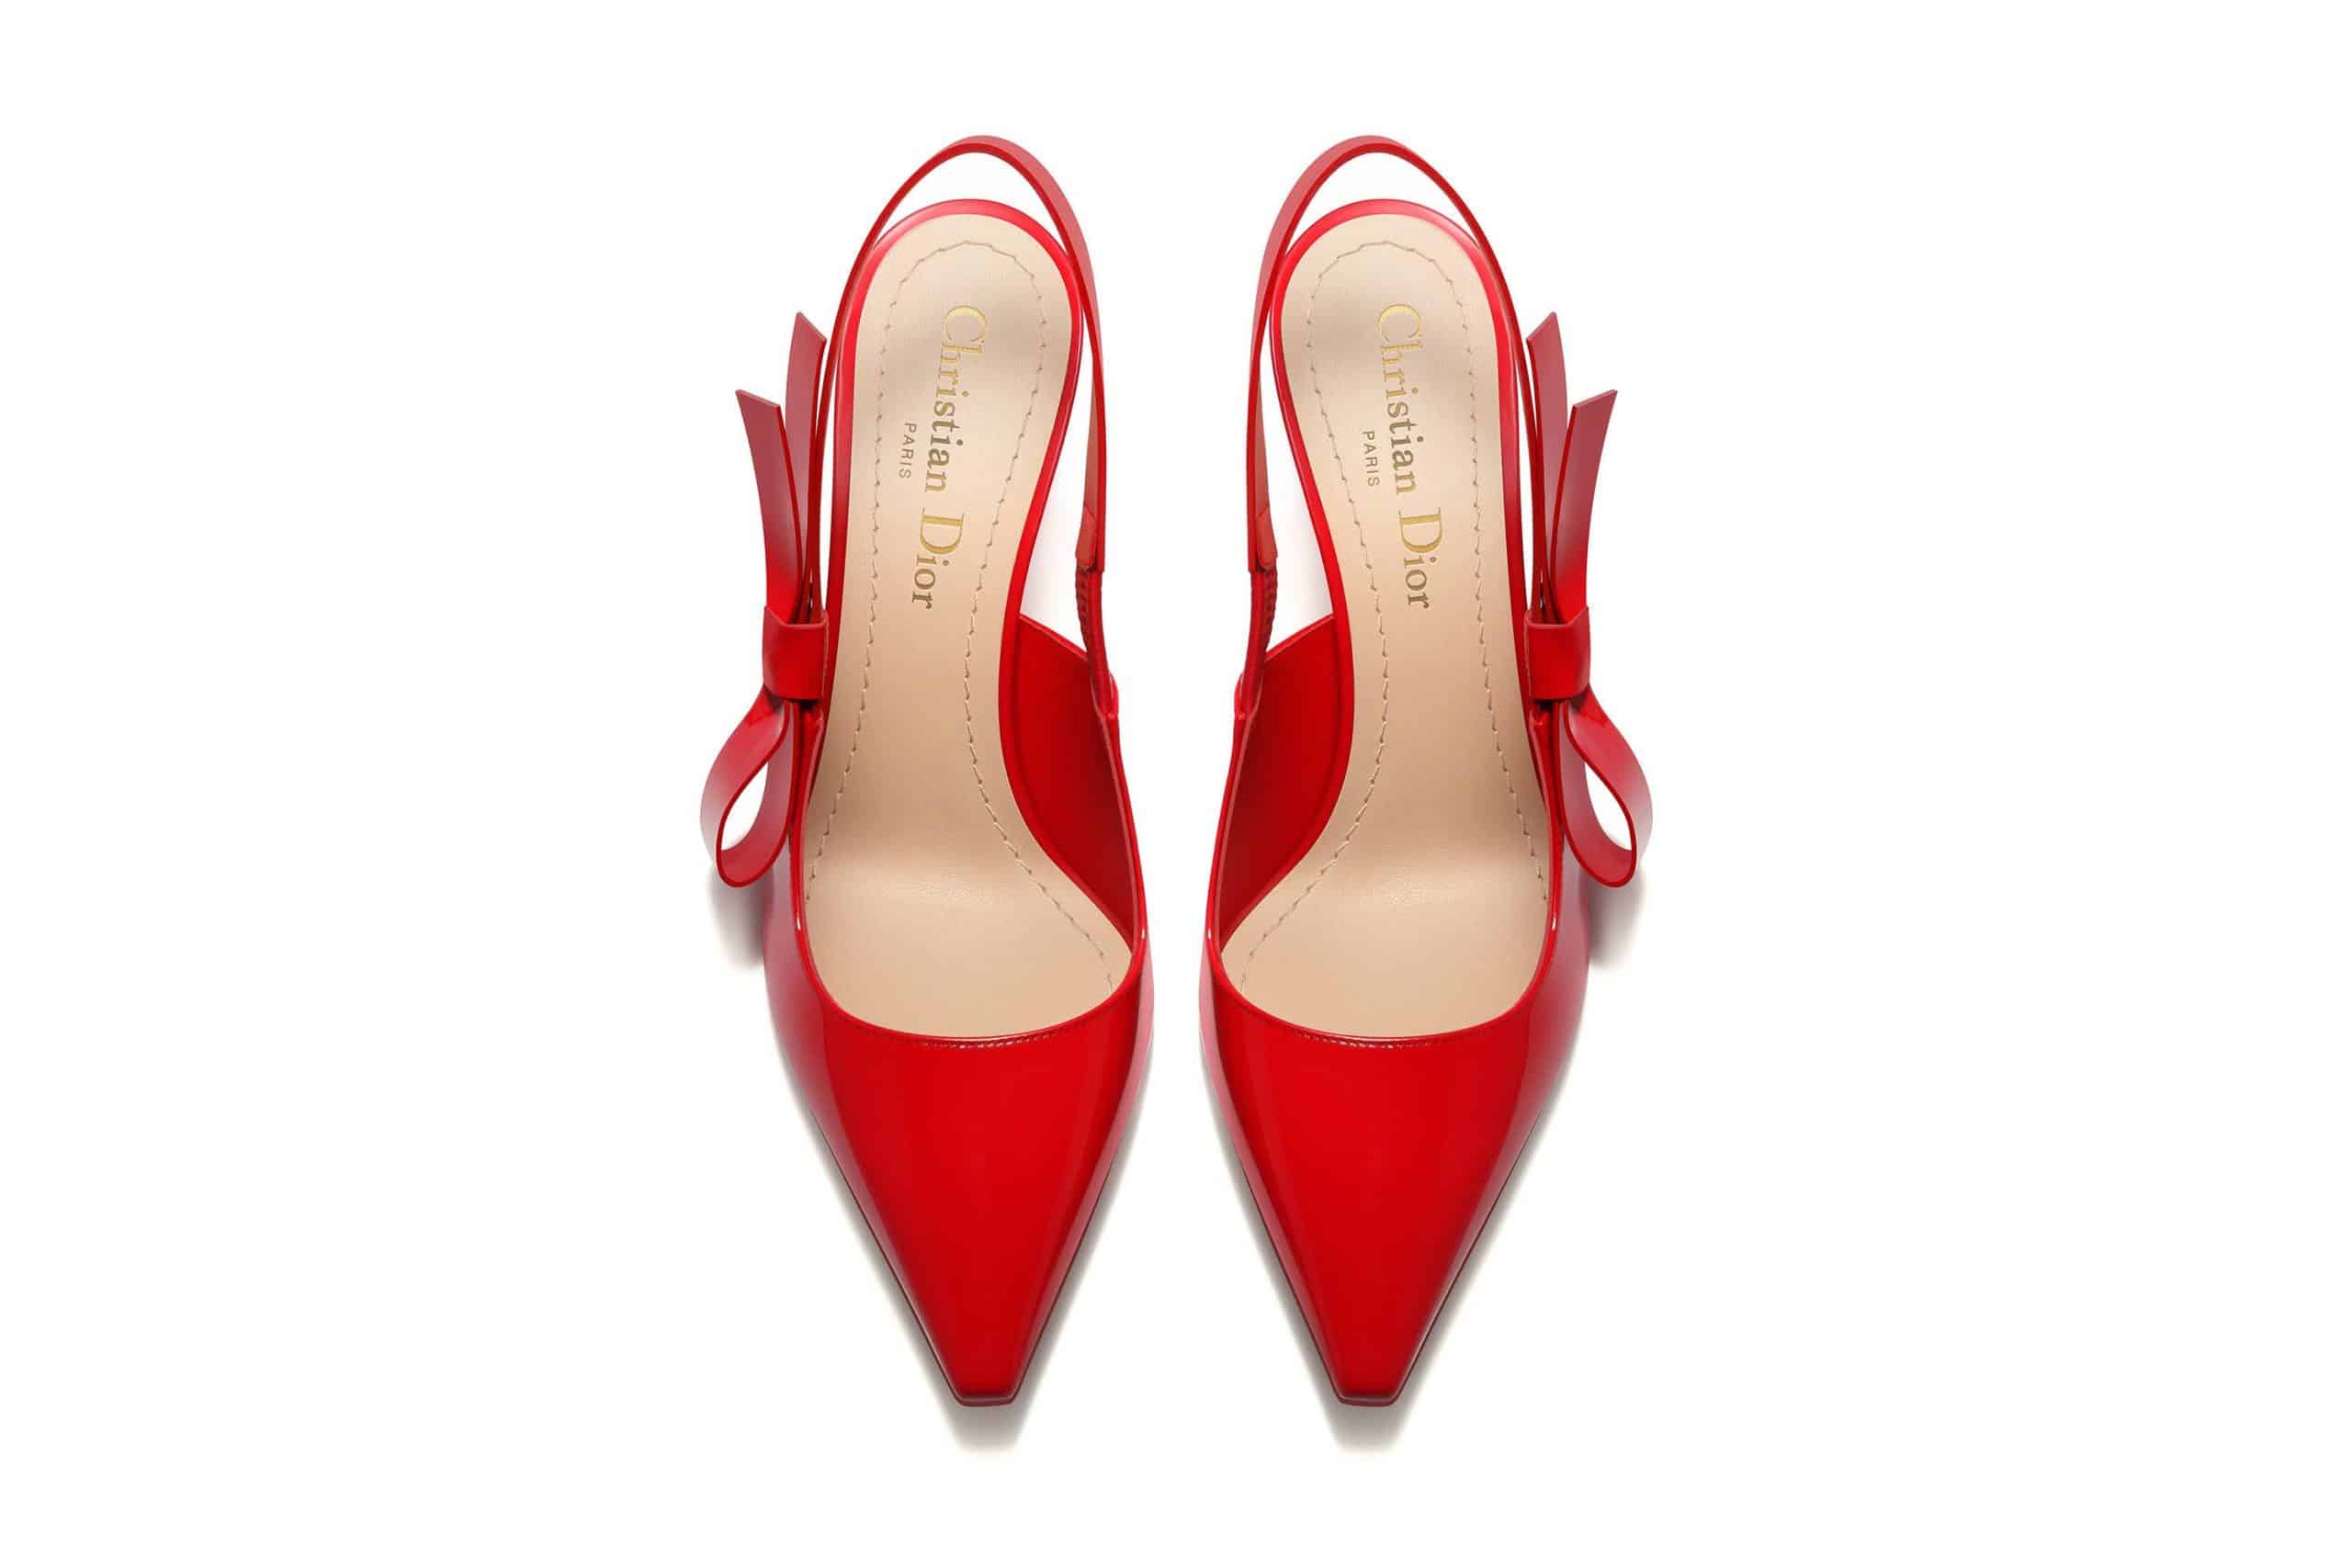 20 Best Designer Shoe Brands for Women to Shop